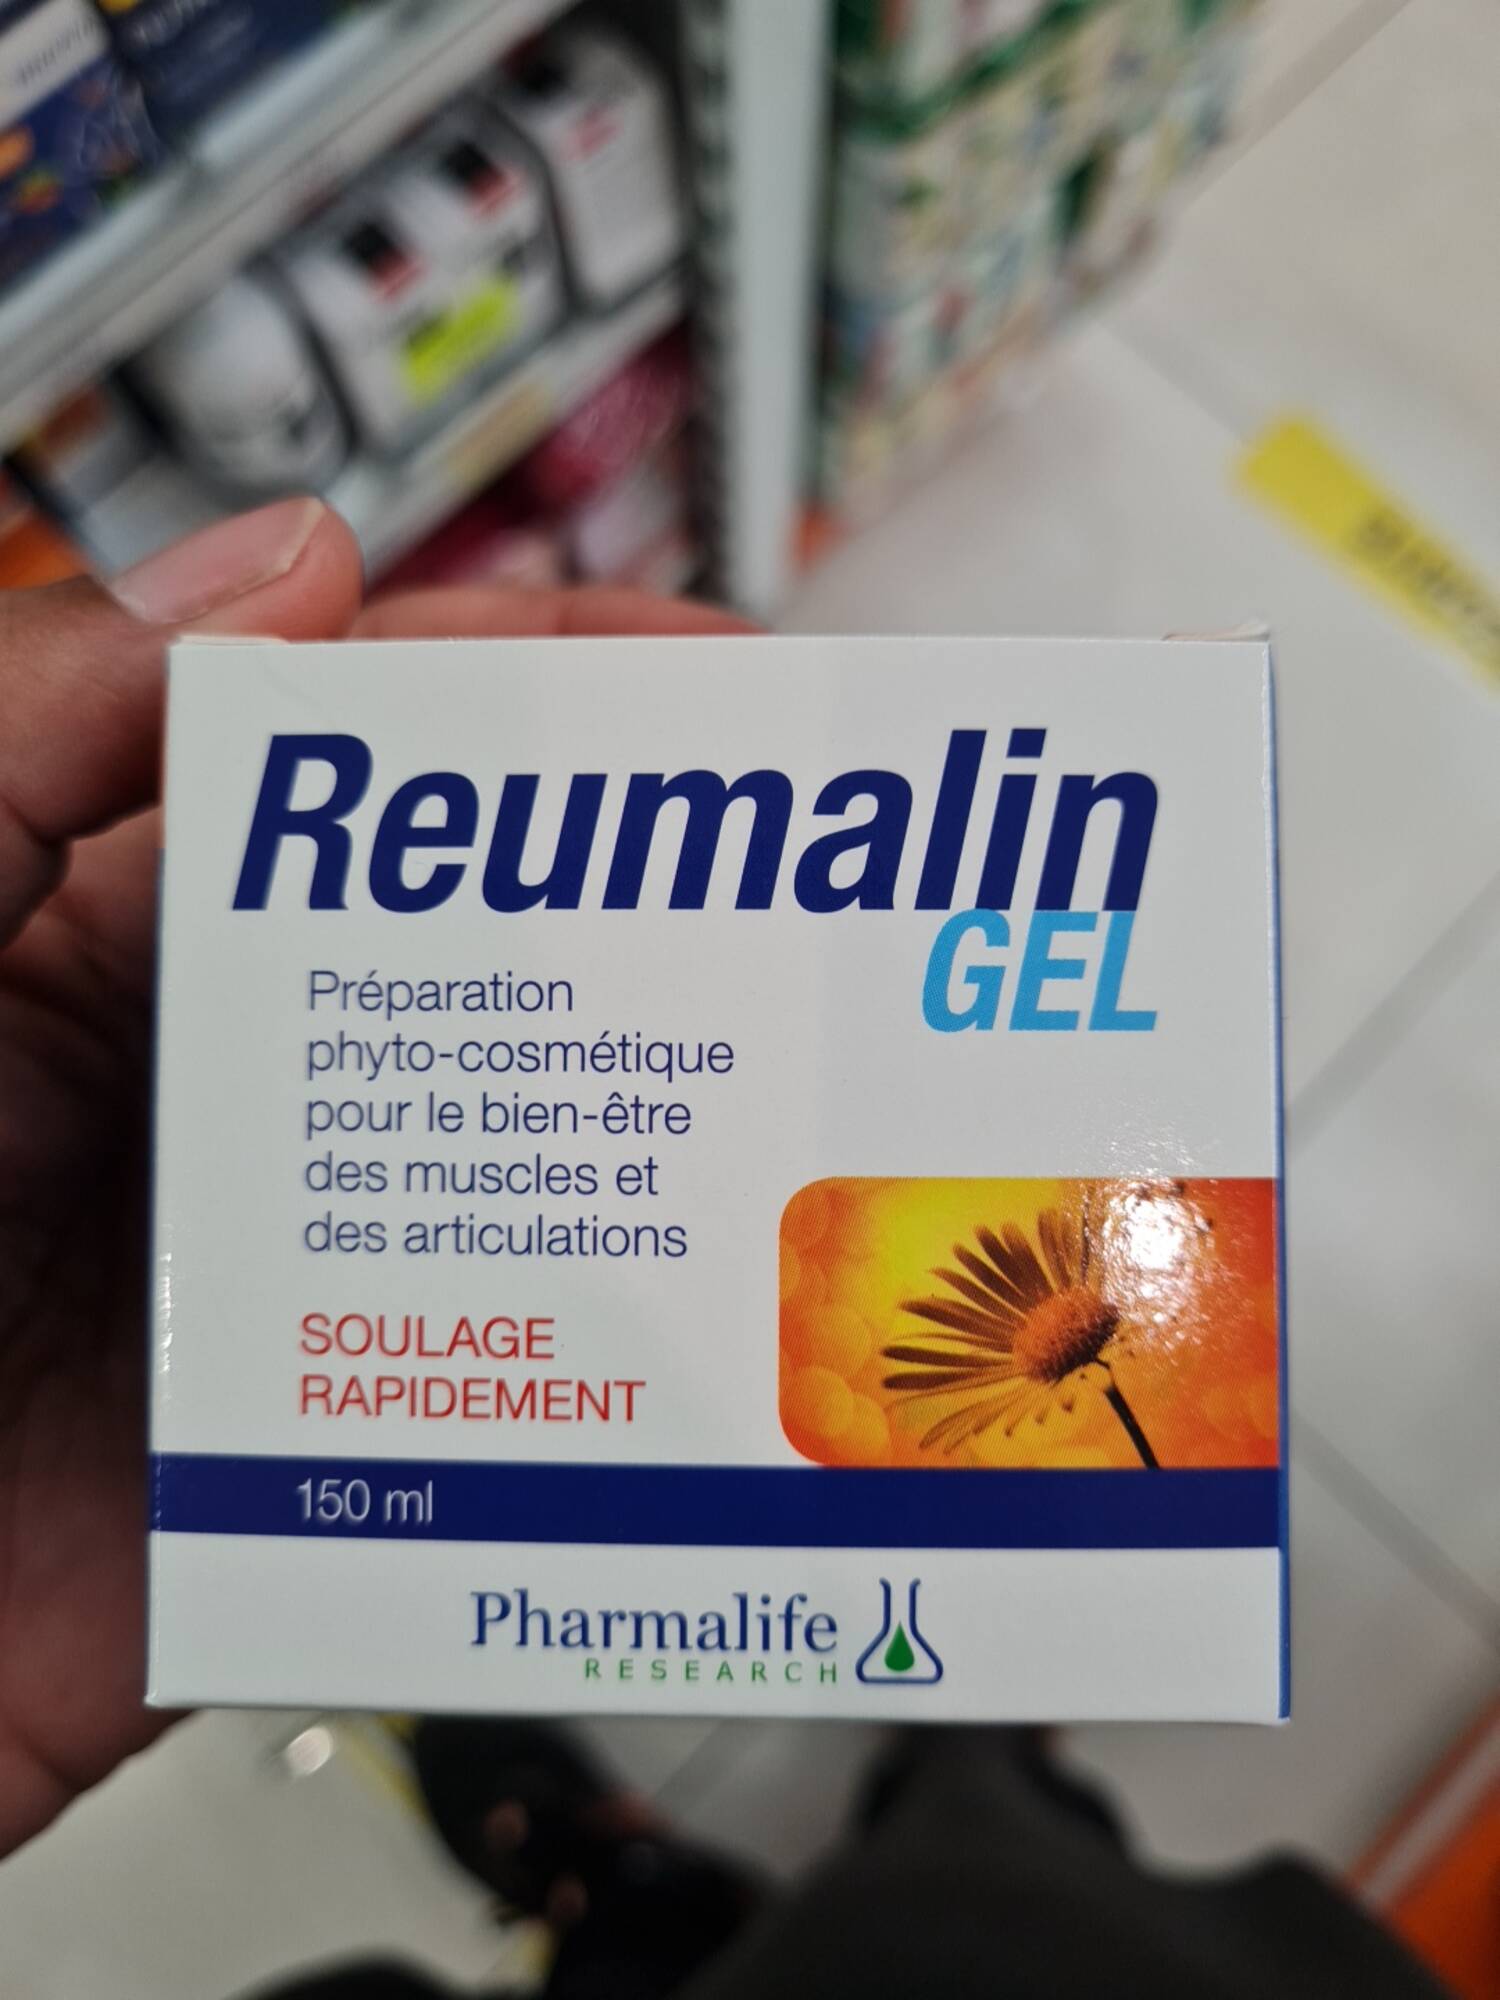 PHARMALIFE RESEARCH - Reumalin gel soulage rapidement